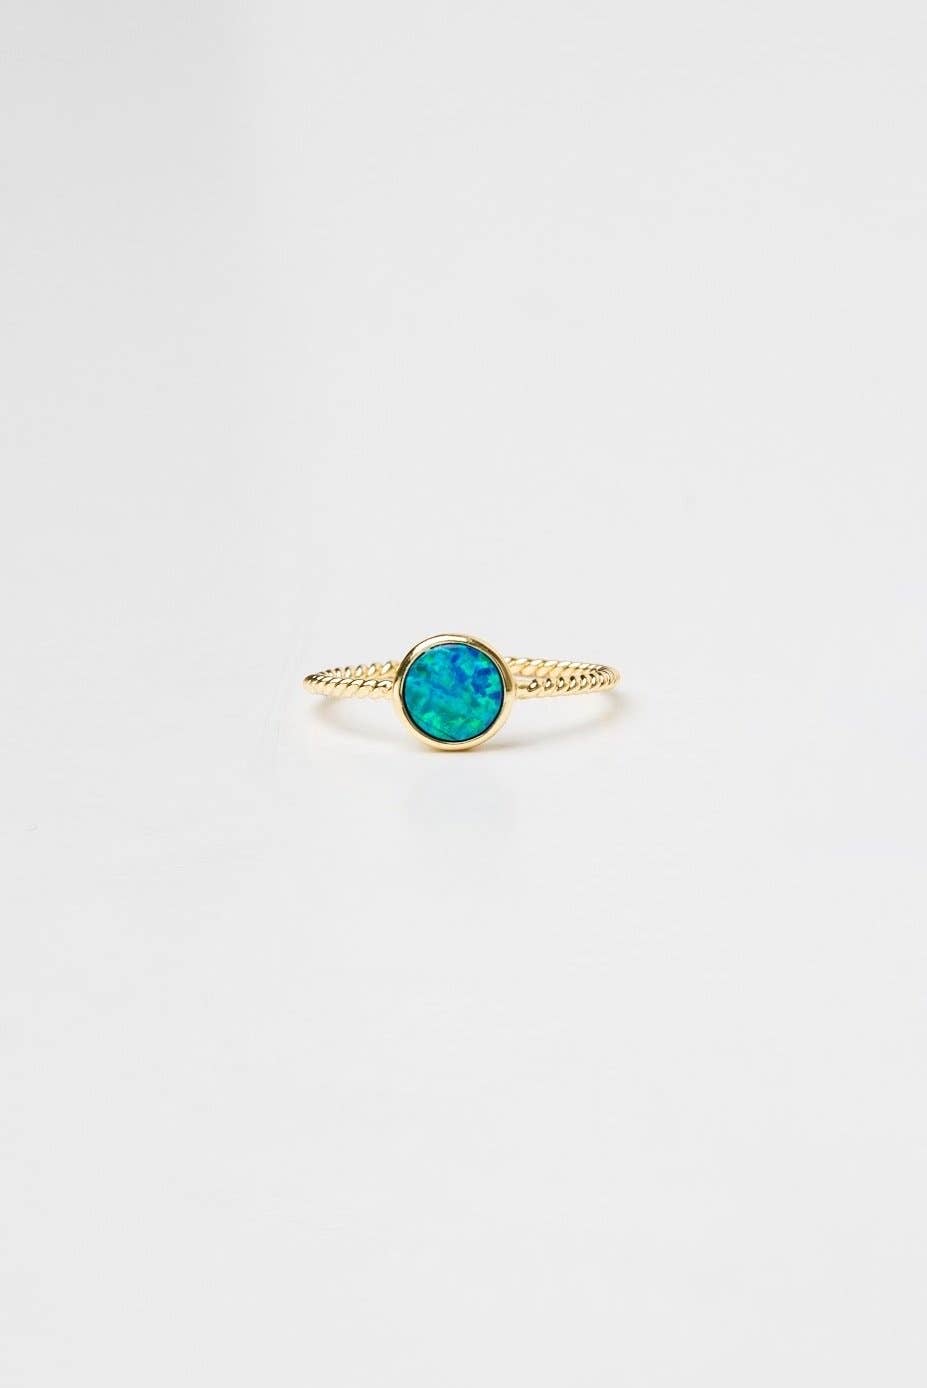 Brenda Grands Jewelry - Blue Opal Ring